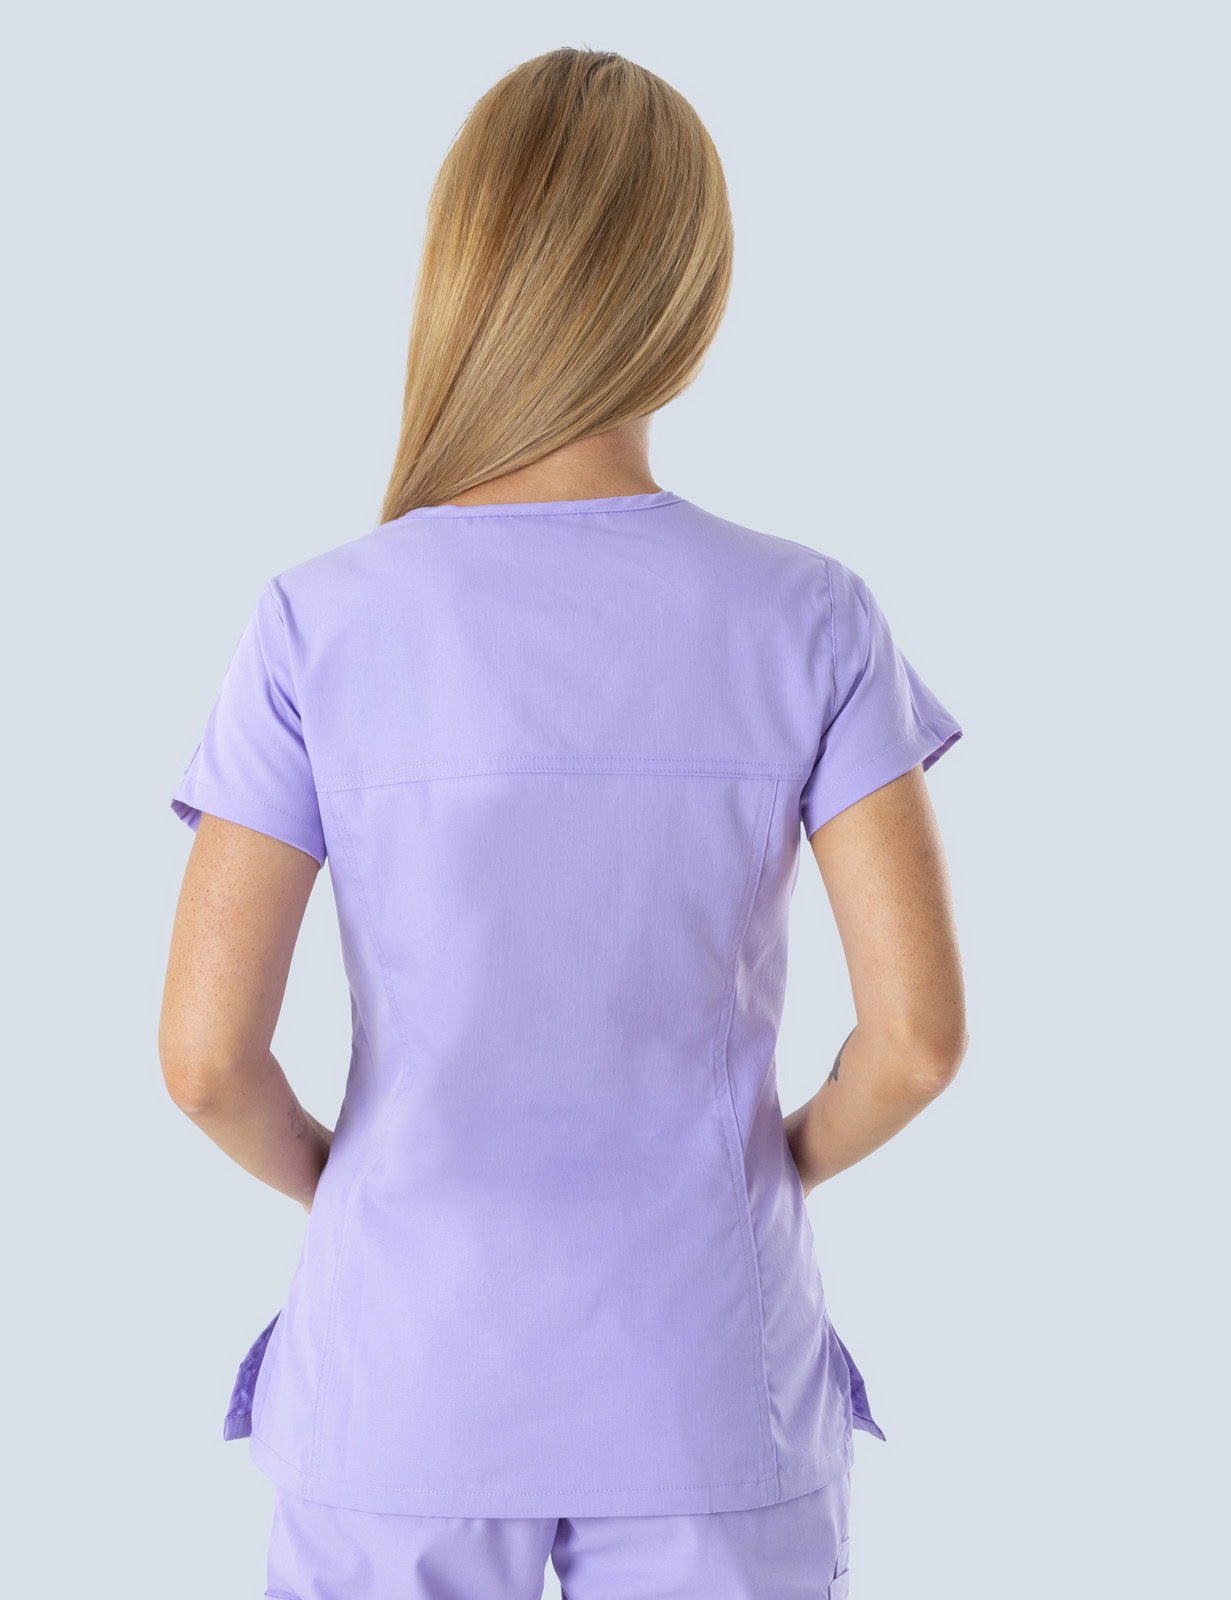 Queensland Children's Hospital Emergency Department Senior Medical Officer Uniform Top Bundle  (Women's Fit Top in Lilac  incl Logos)